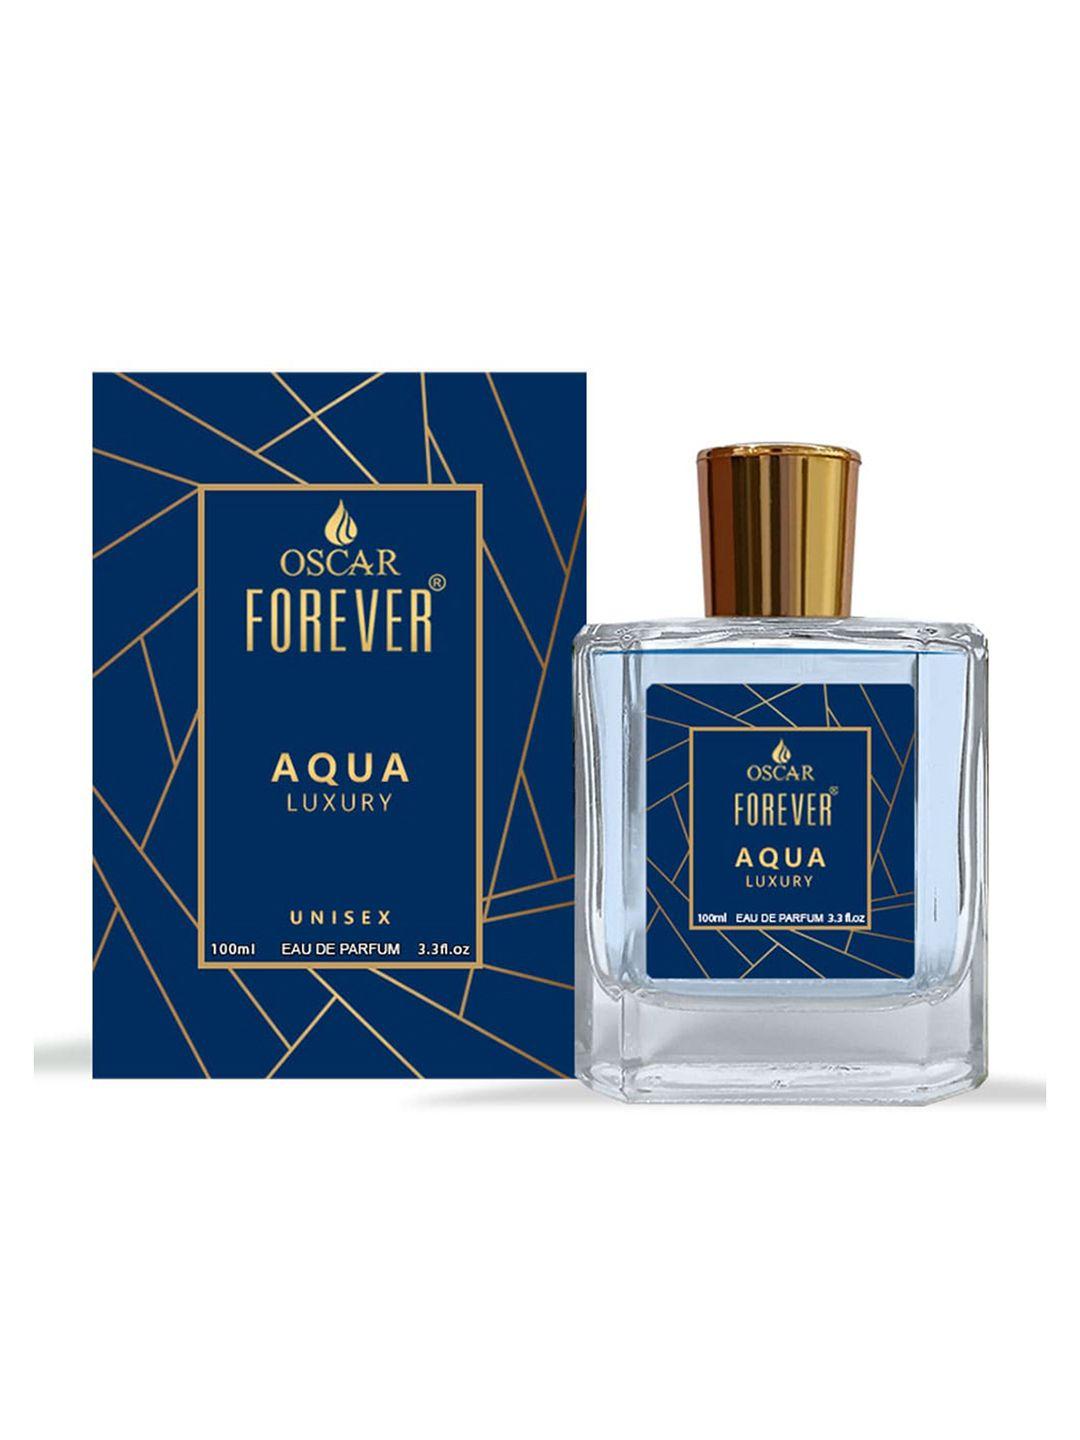 oscar forever aqua luxury long lasting eau de perfume - 100 ml